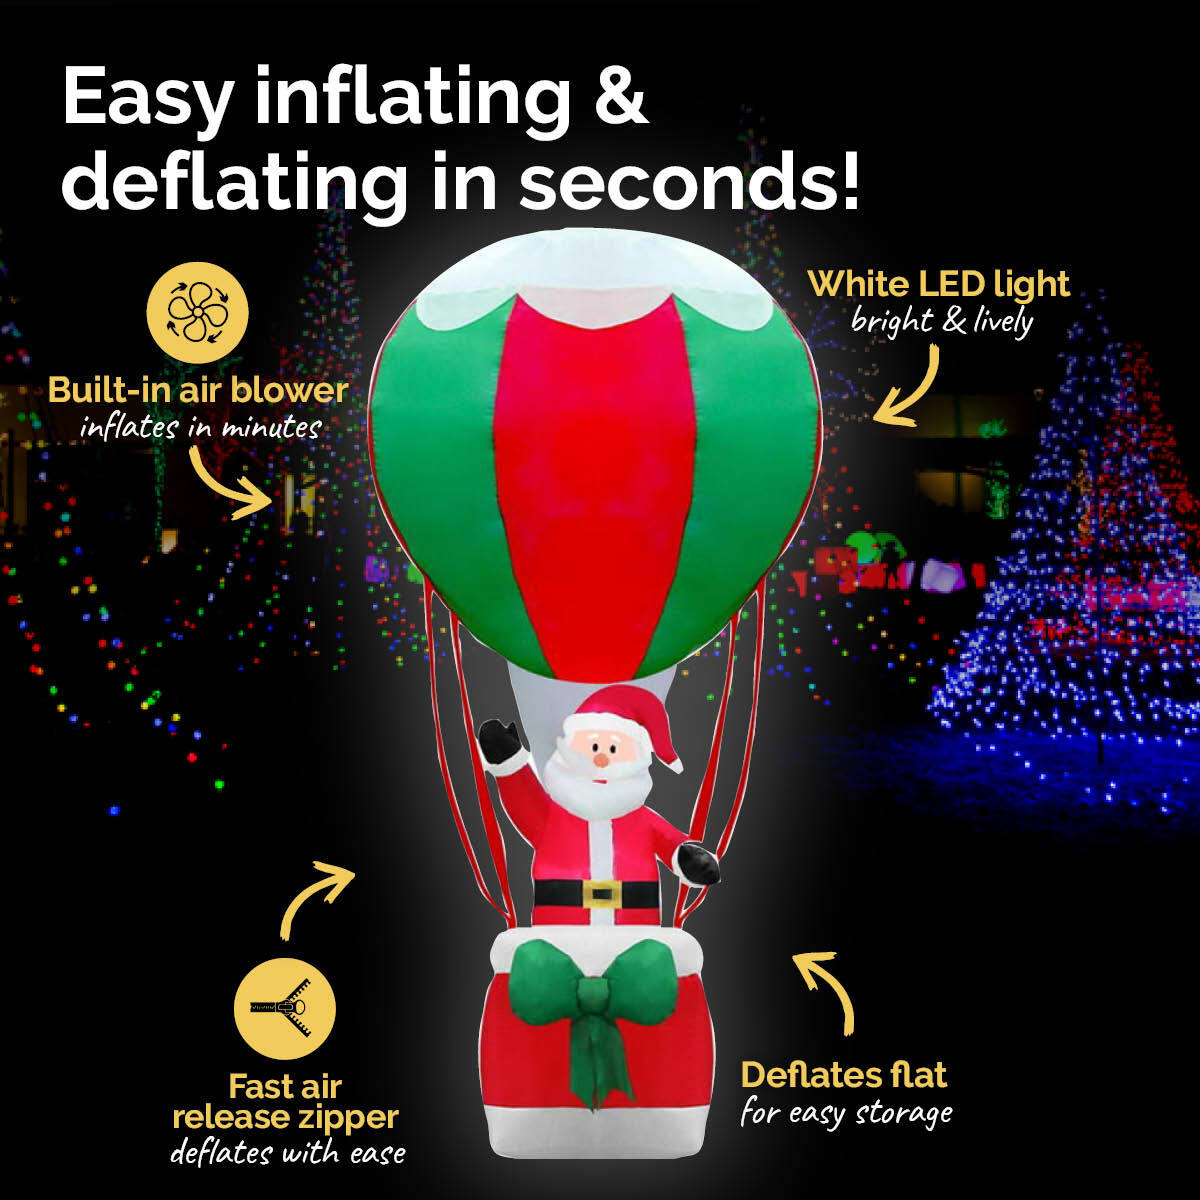 Christmas By Sas 1.8m Santa & Hot Air Balloon Self Inflating LED Lighting